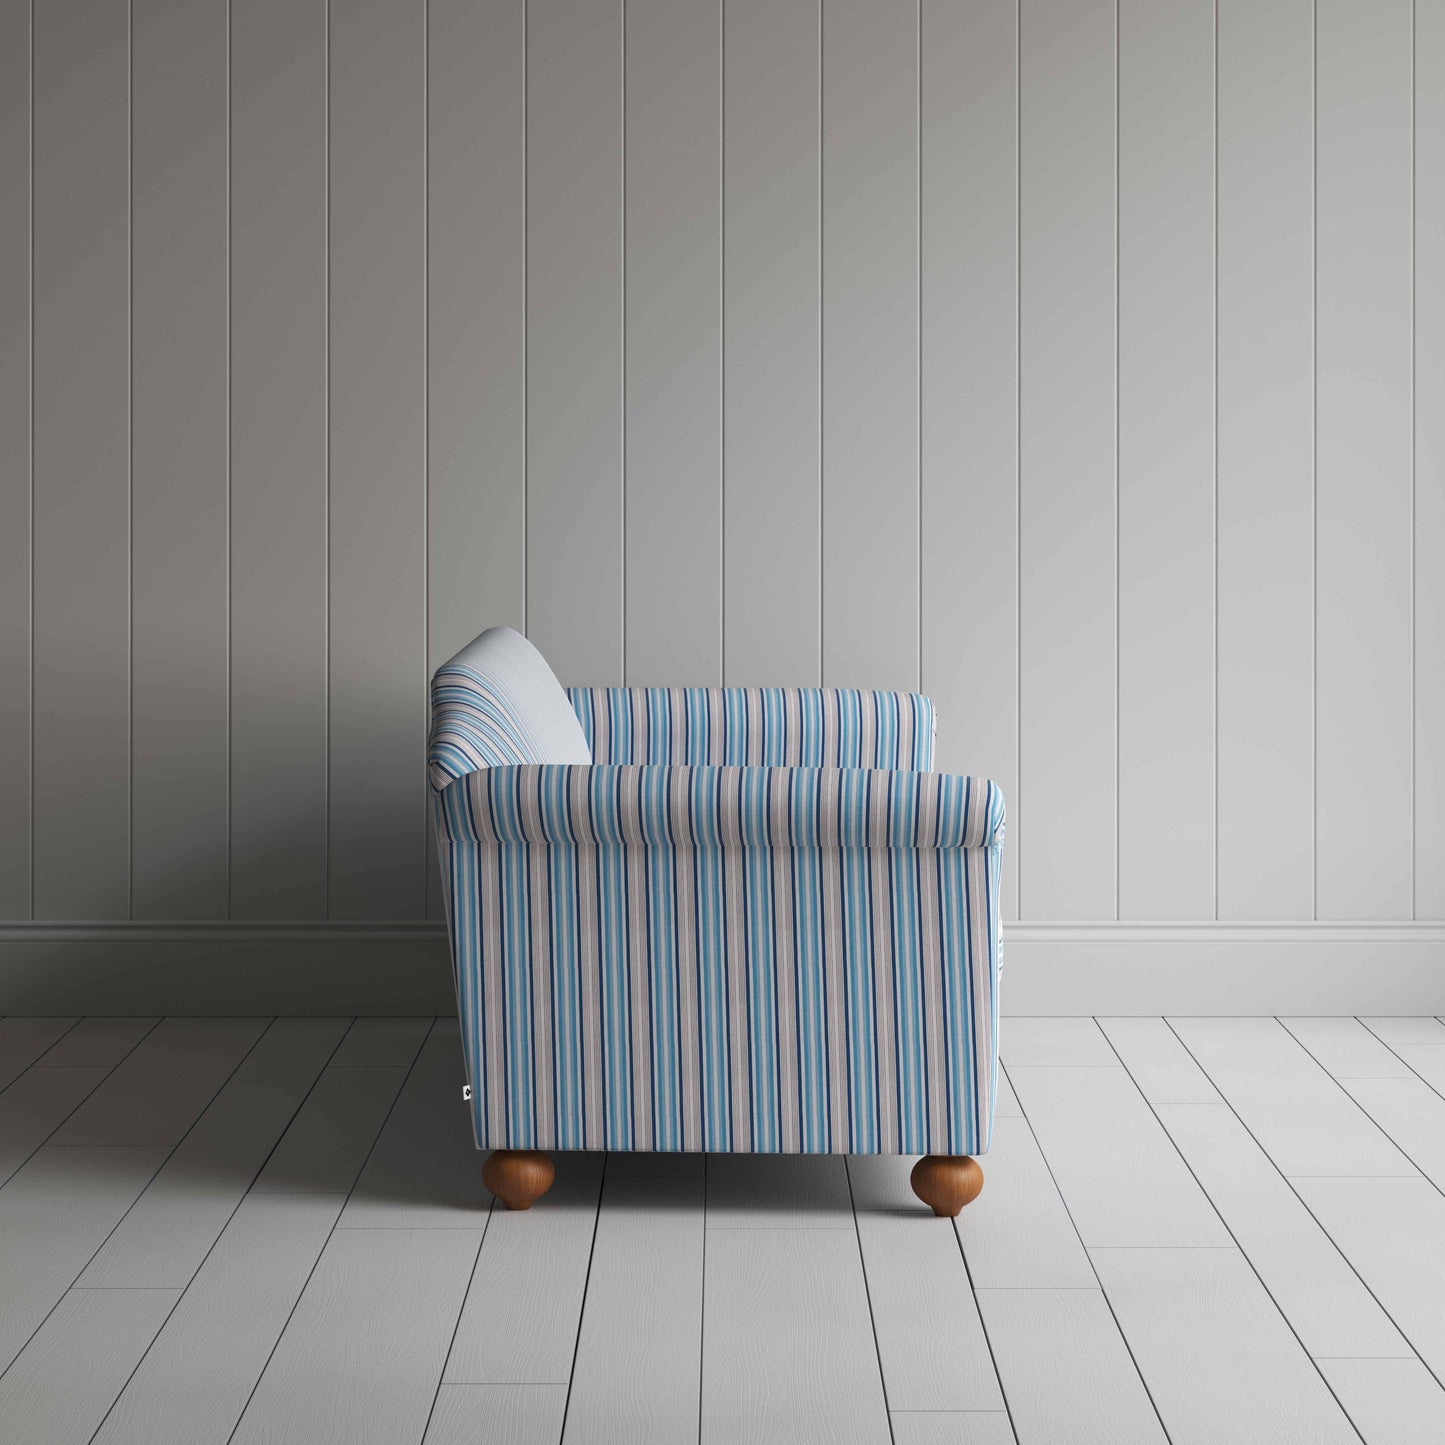 Dolittle 4 Seater Sofa in Slow Lane Cotton Linen, Blue